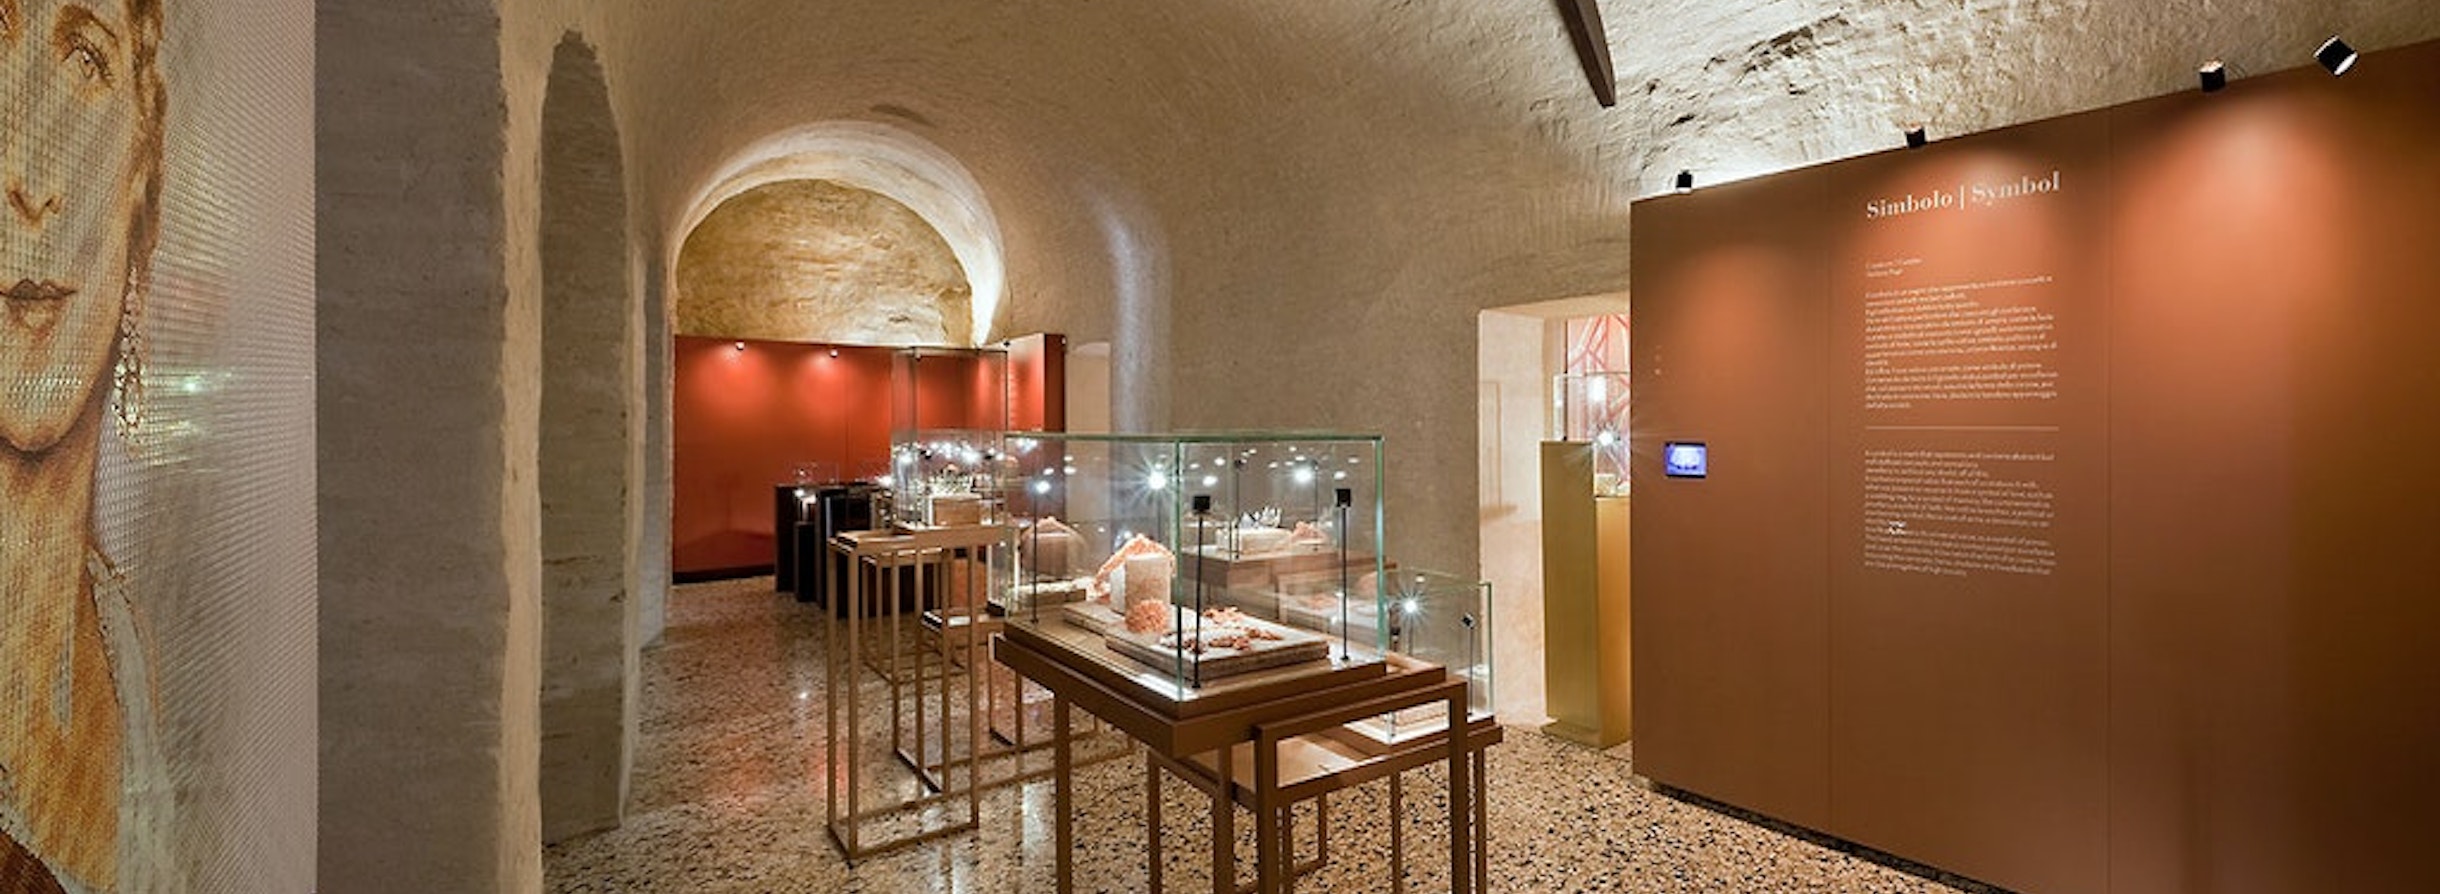 museums-museo-del-gioiello-vicenza-flos-03-1440x840-1